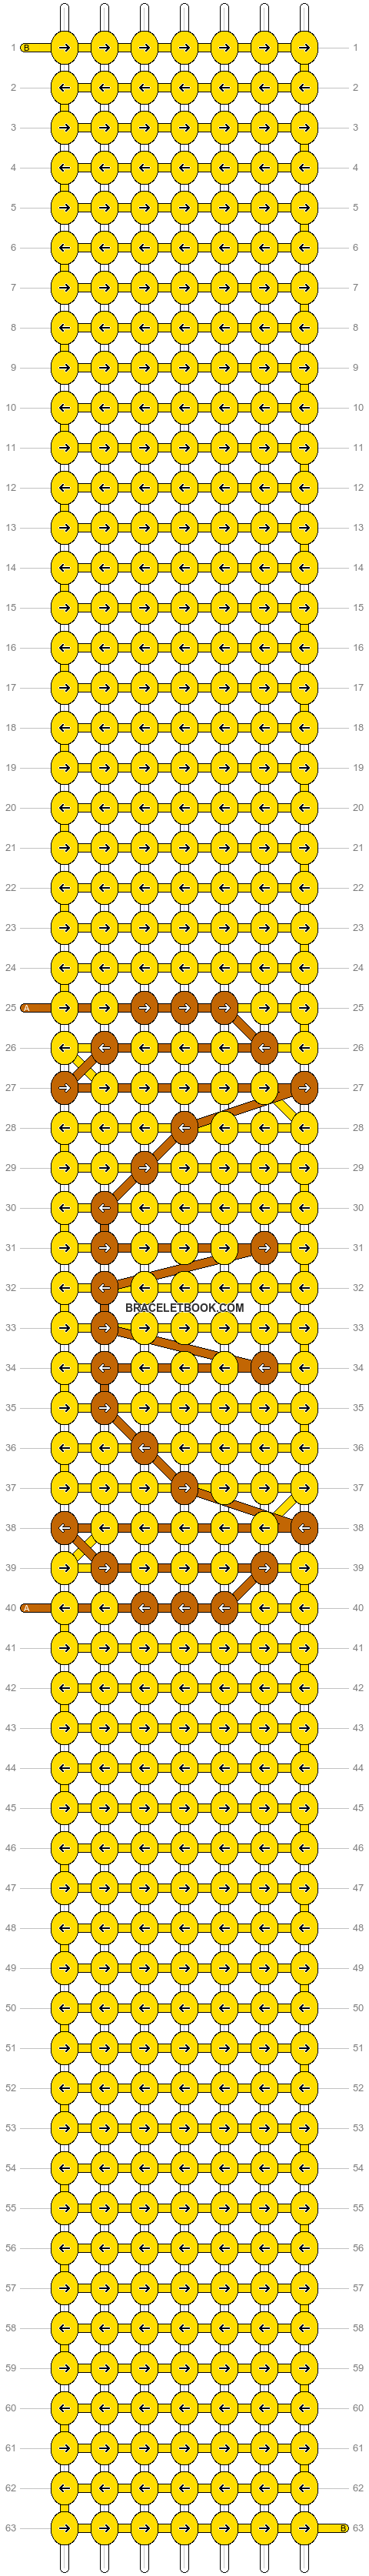 Alpha pattern #78135 variation #152085 pattern